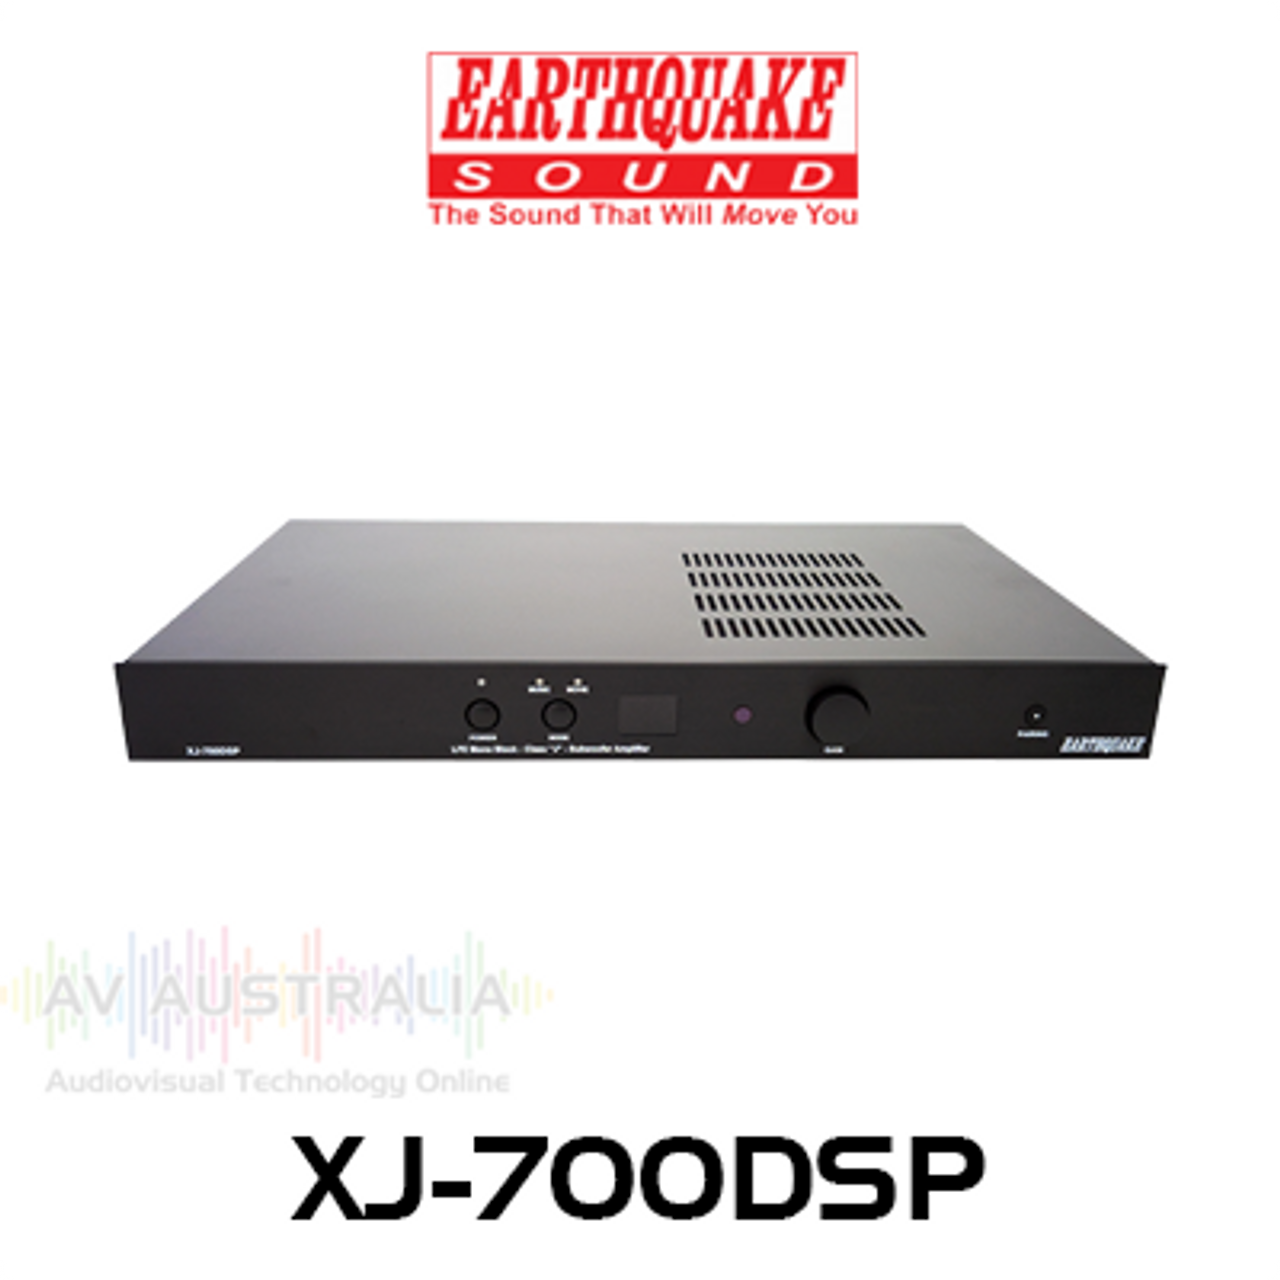 EarthQuake XJ-700DSP 700W Class J Mono Block Amplifier